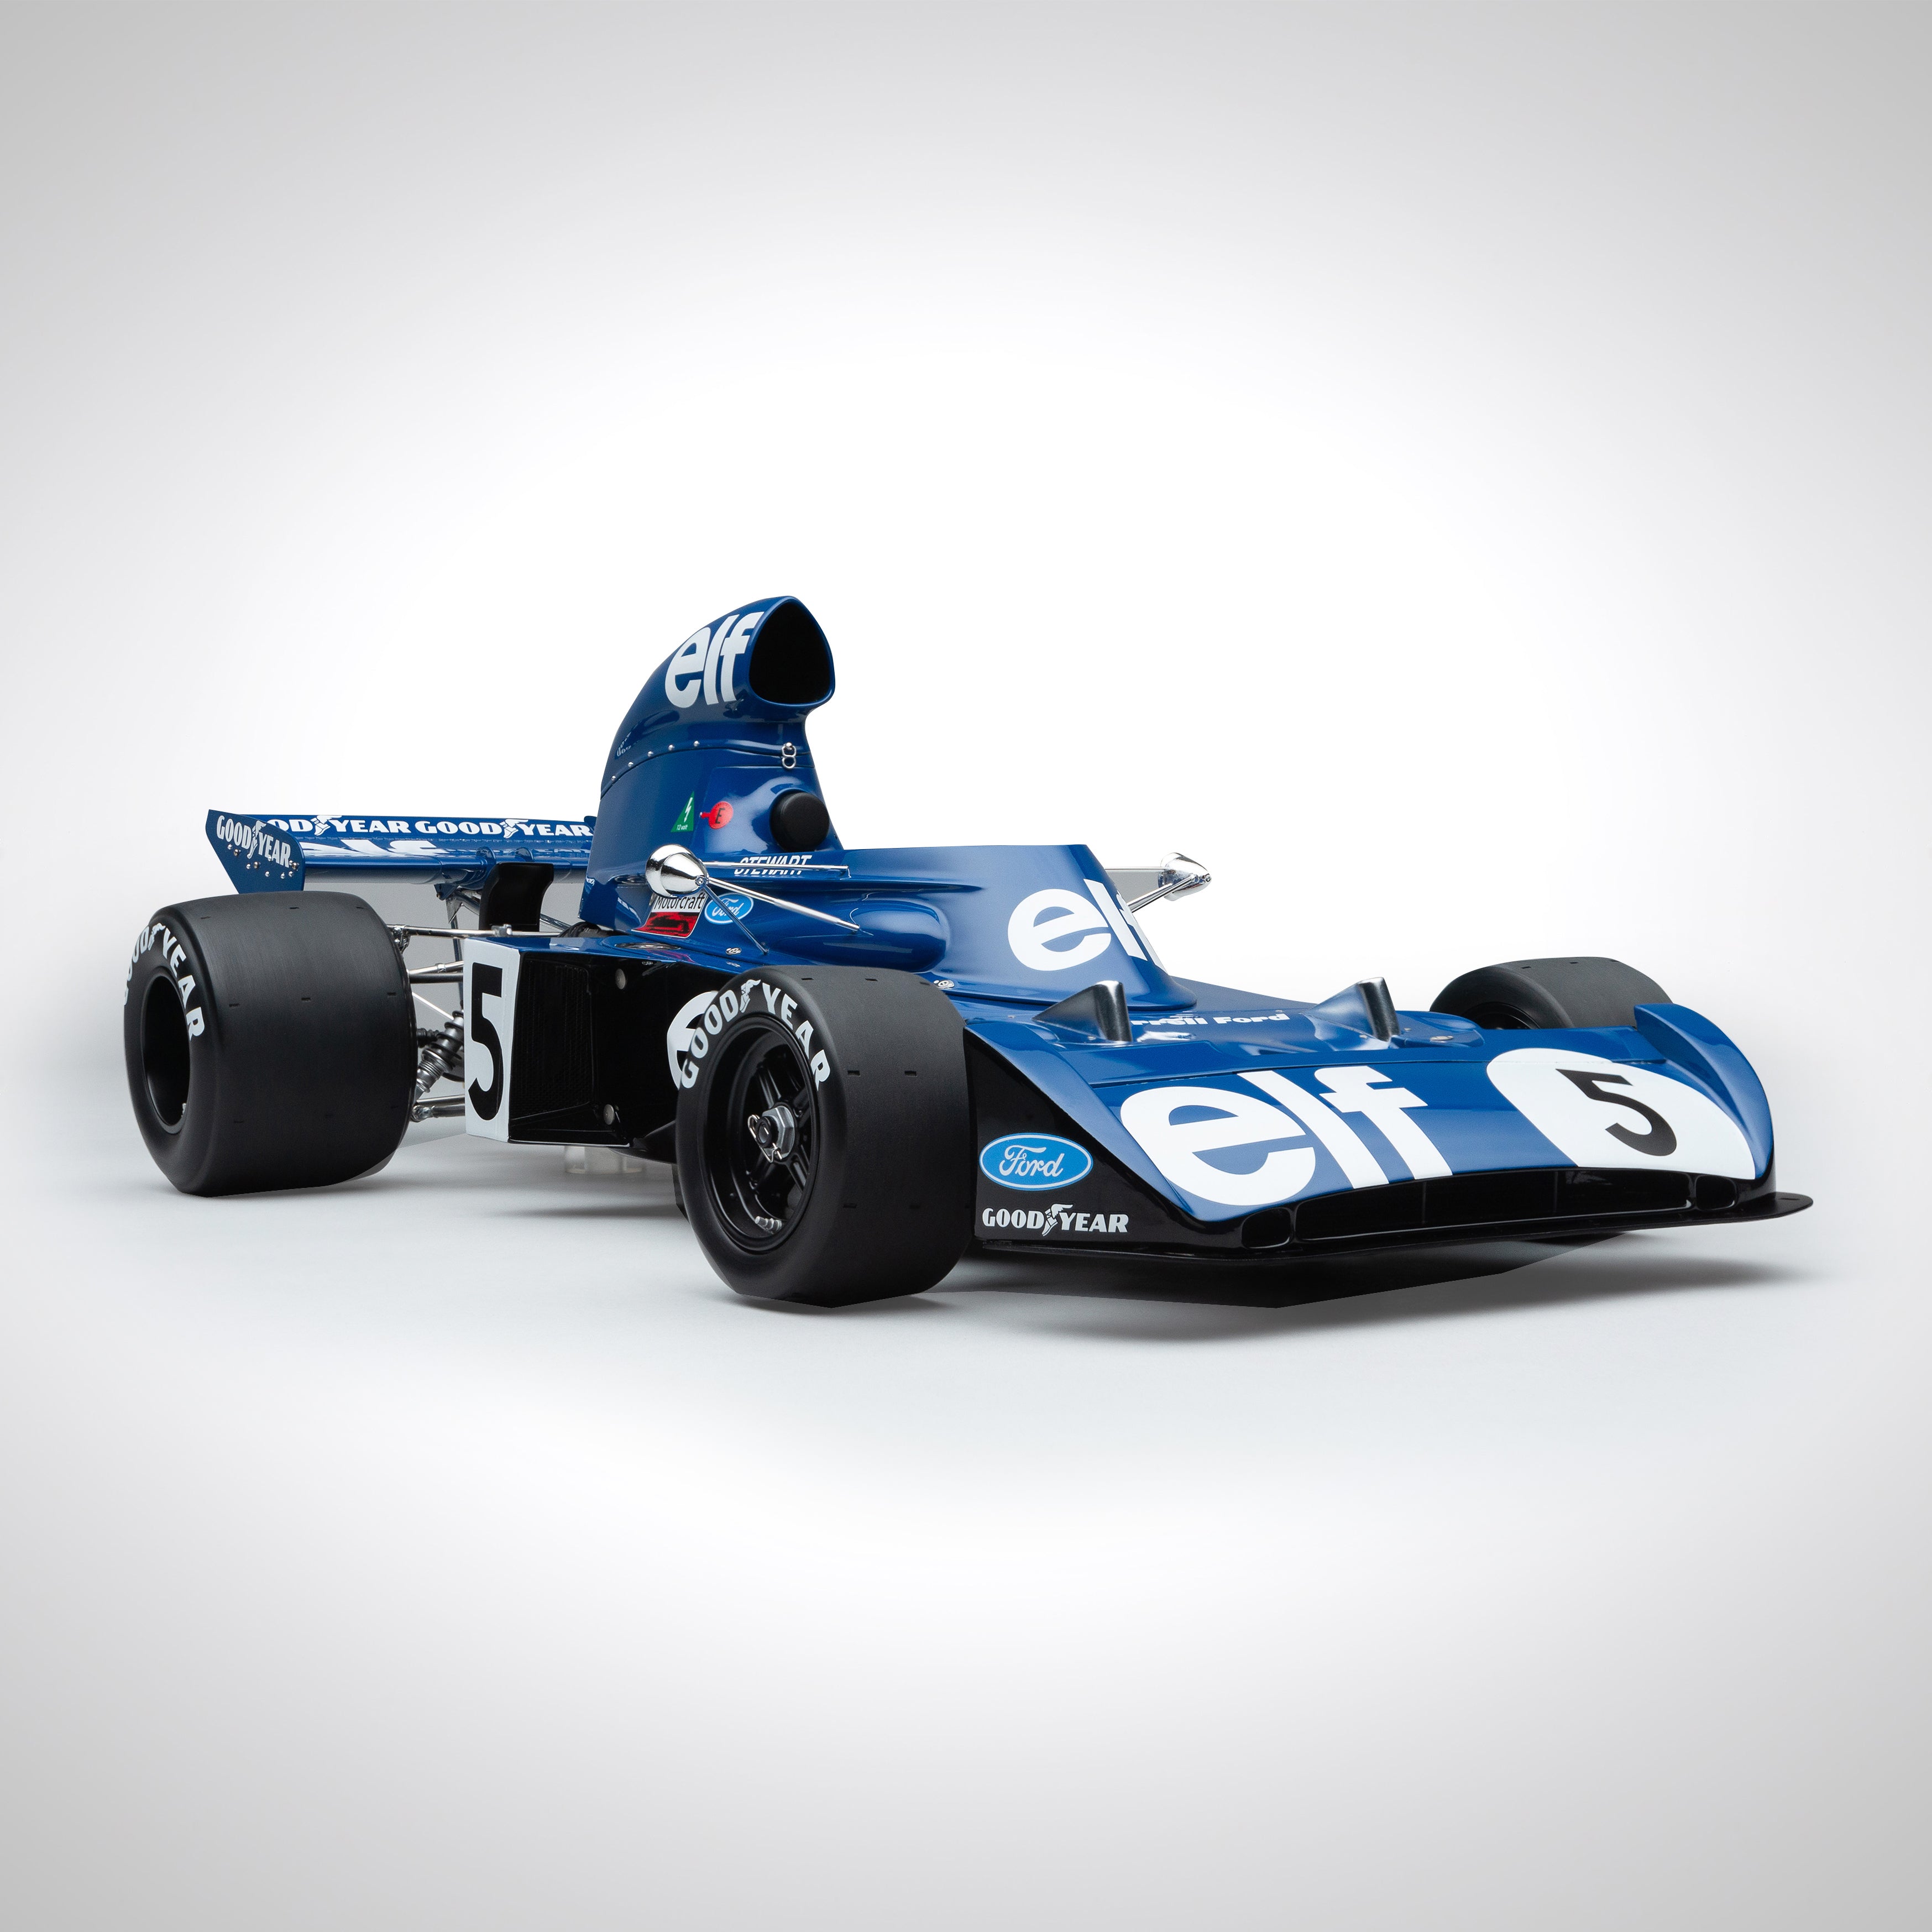 Elf Team Tyrrell 1973 006 German Grand Prix 1:8 Scale Model